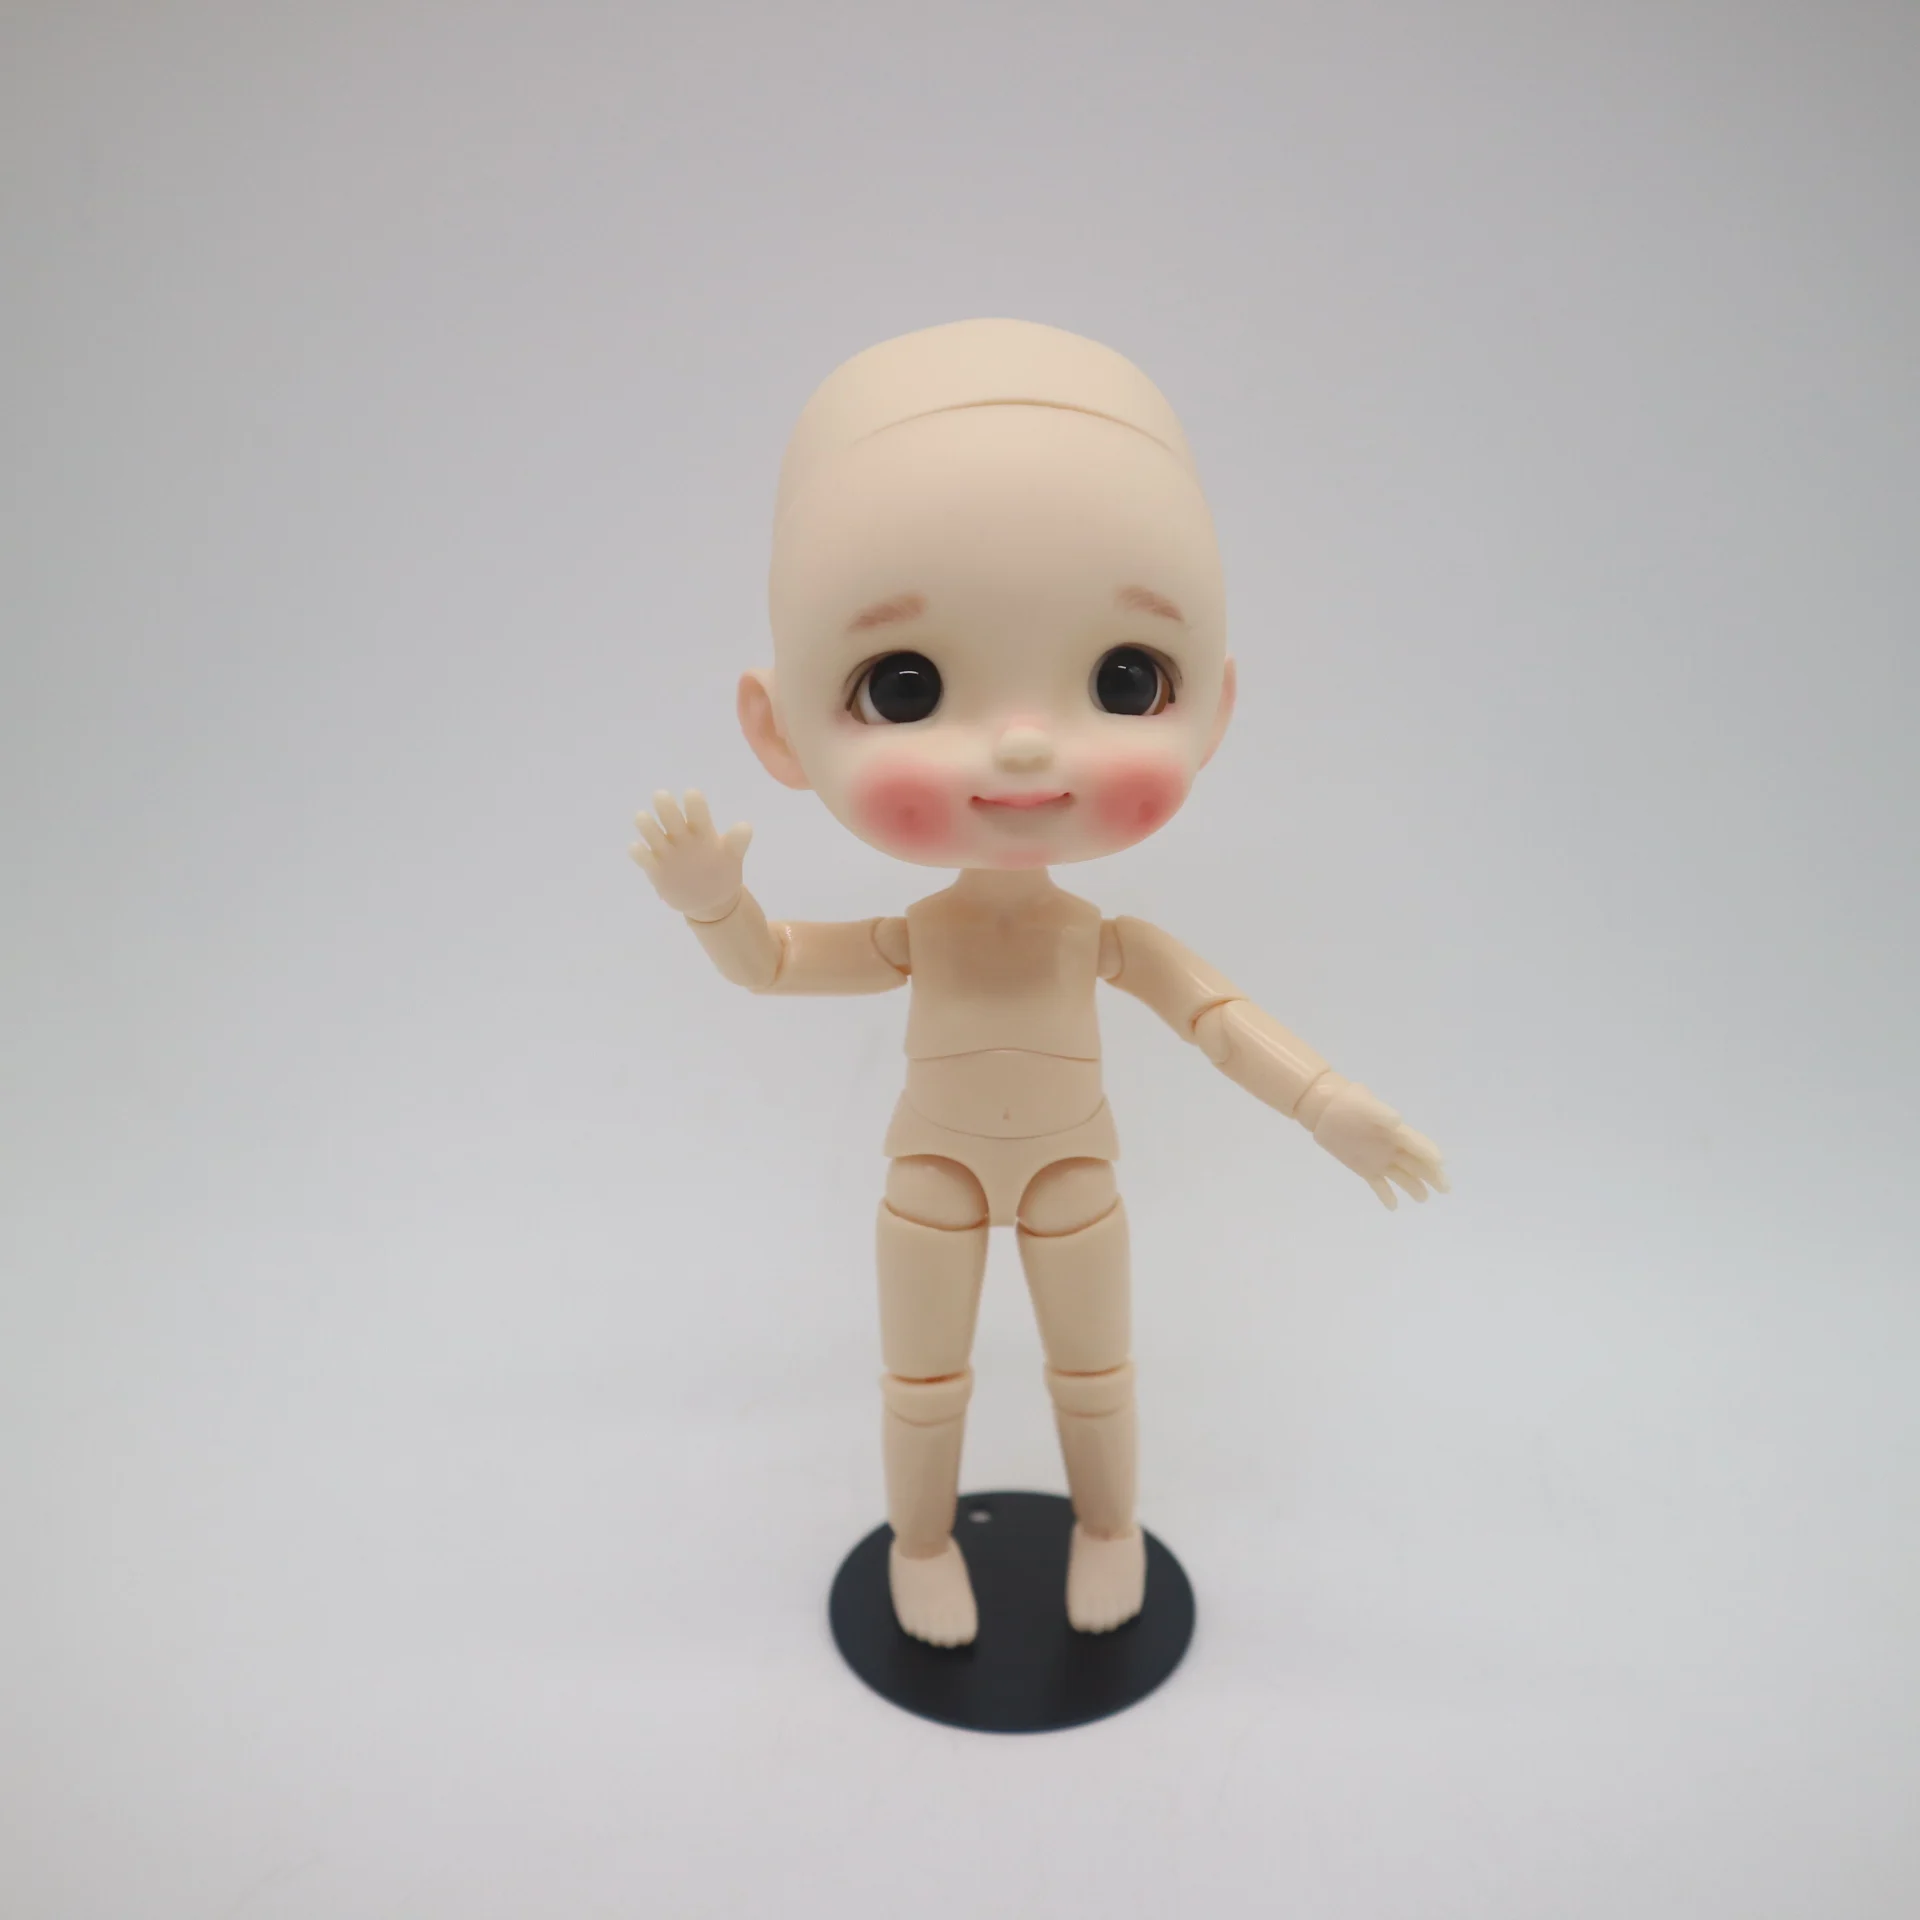 OB11 кукла, 3,0 Dimples кукла Кастомизация 8/1 BJD куклы Мини-куклы, Dimples